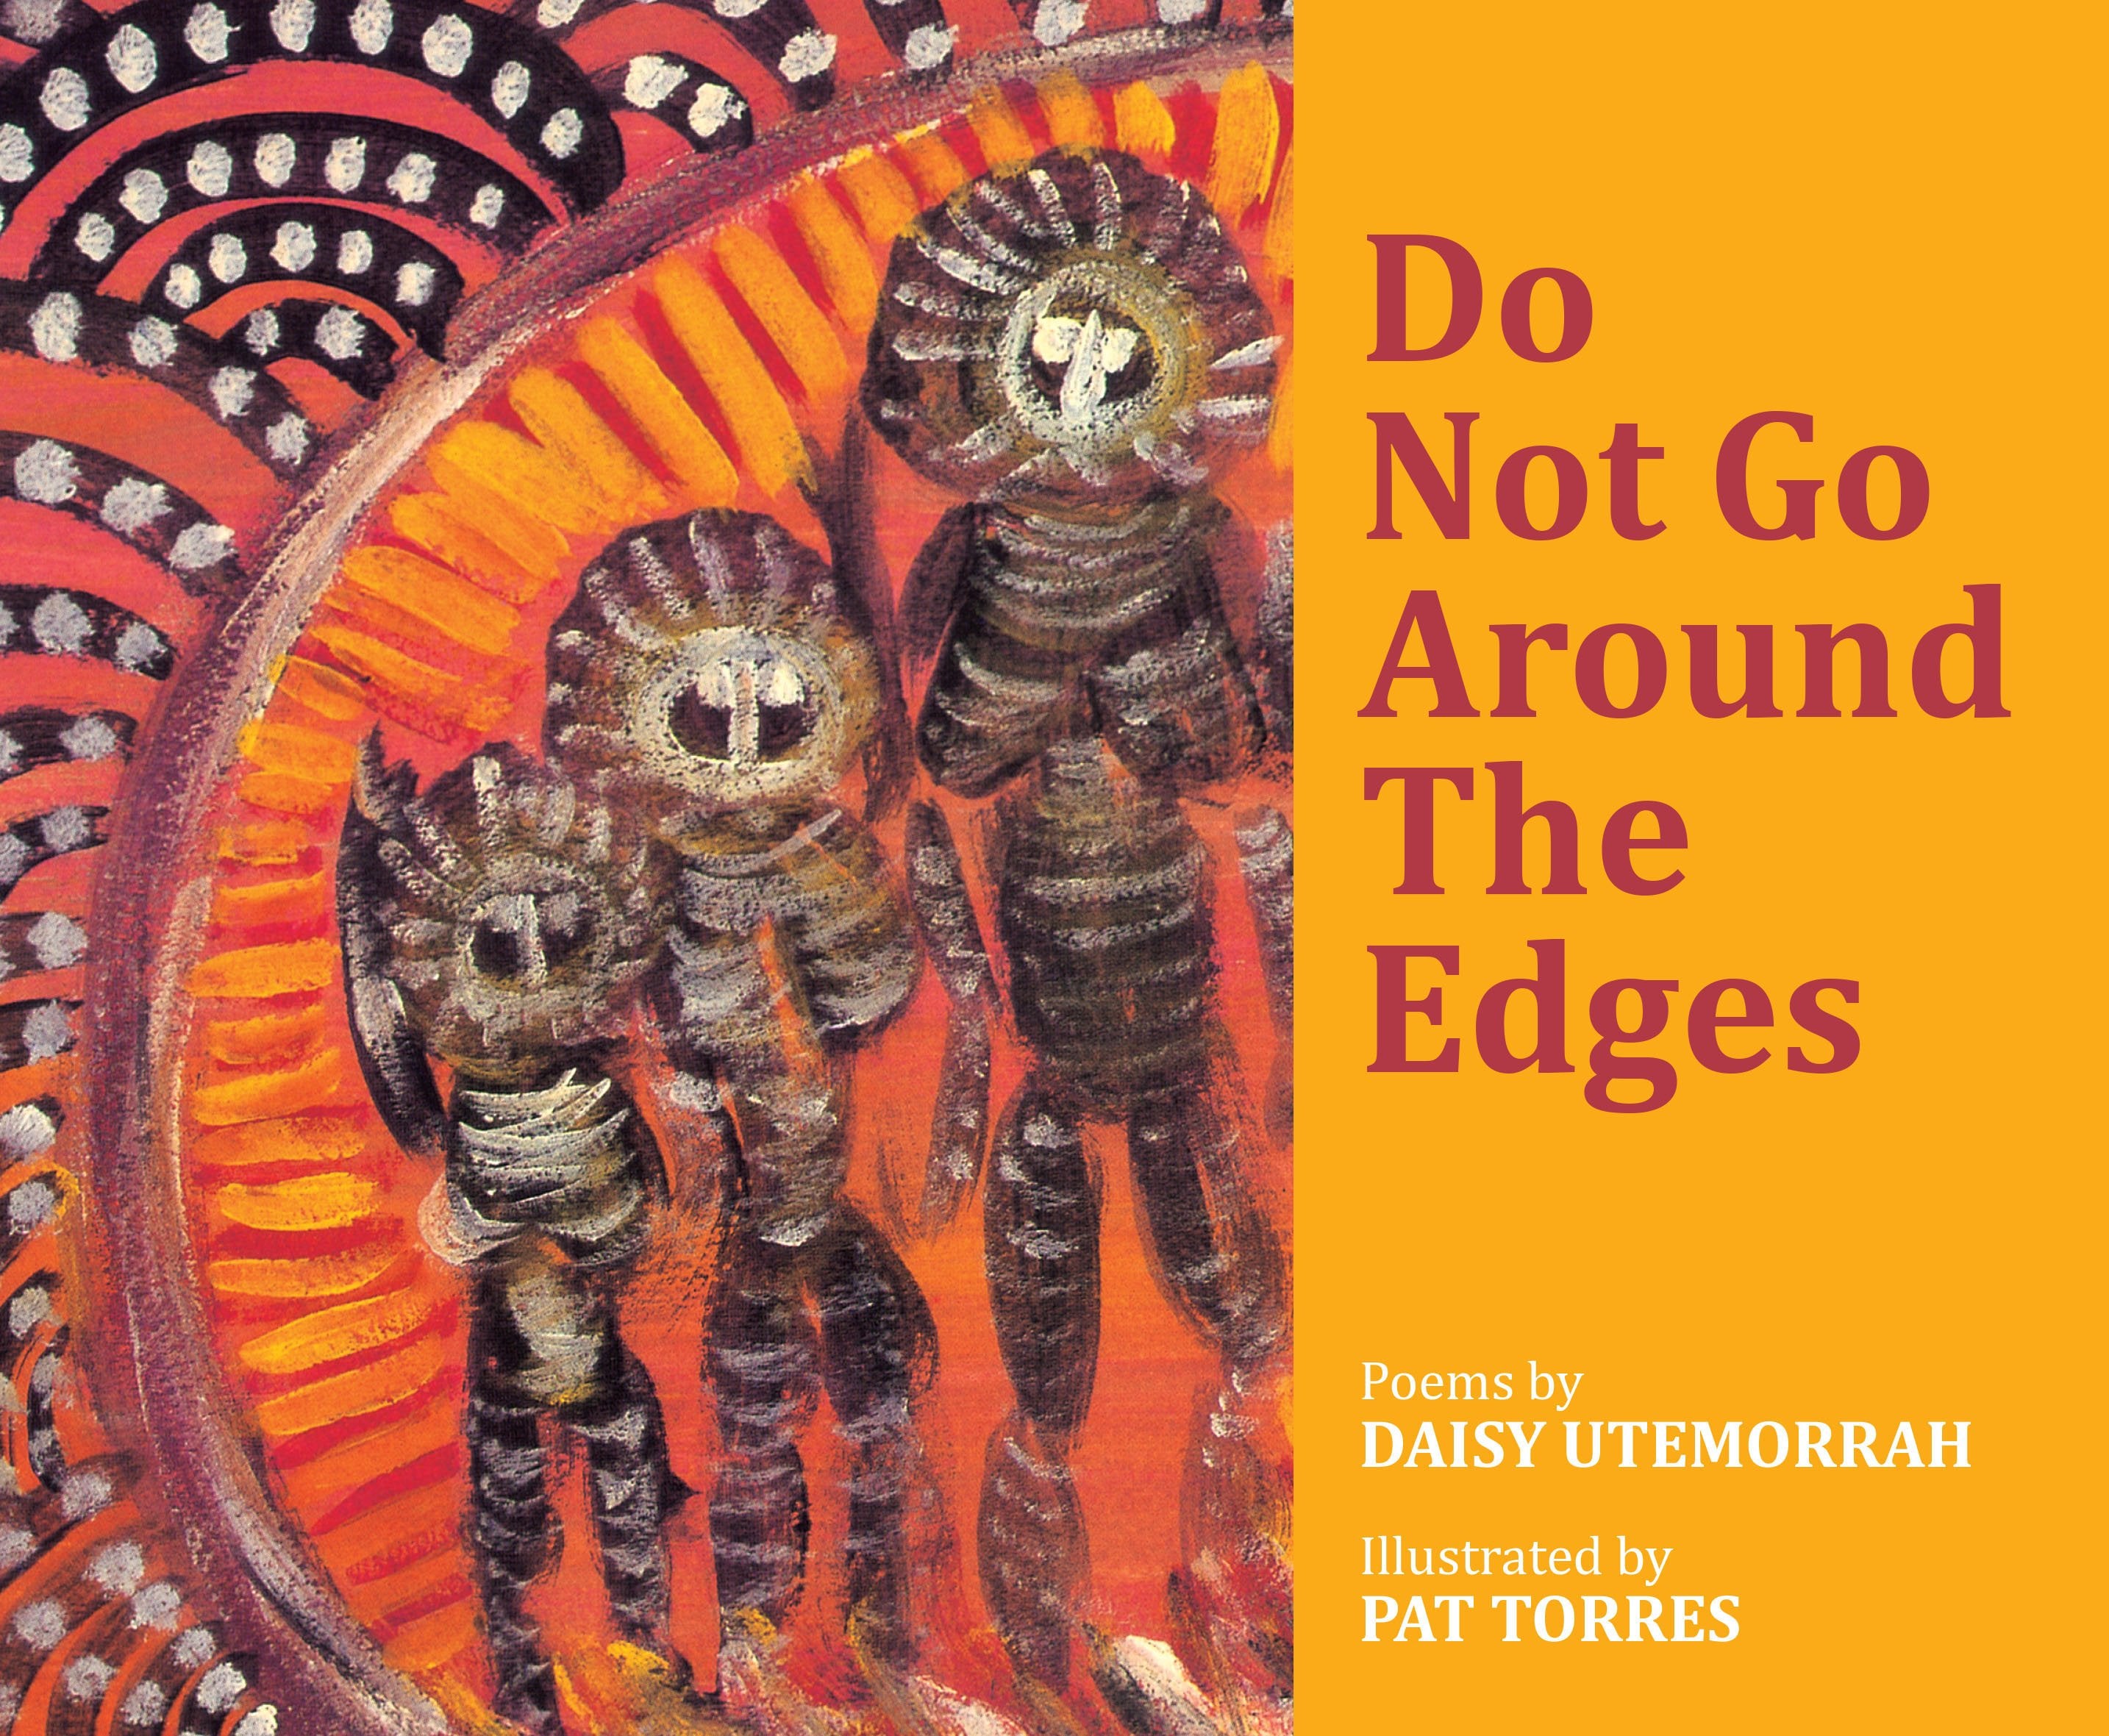 Do Not Go Around the Edges by Daisy Utemorrah